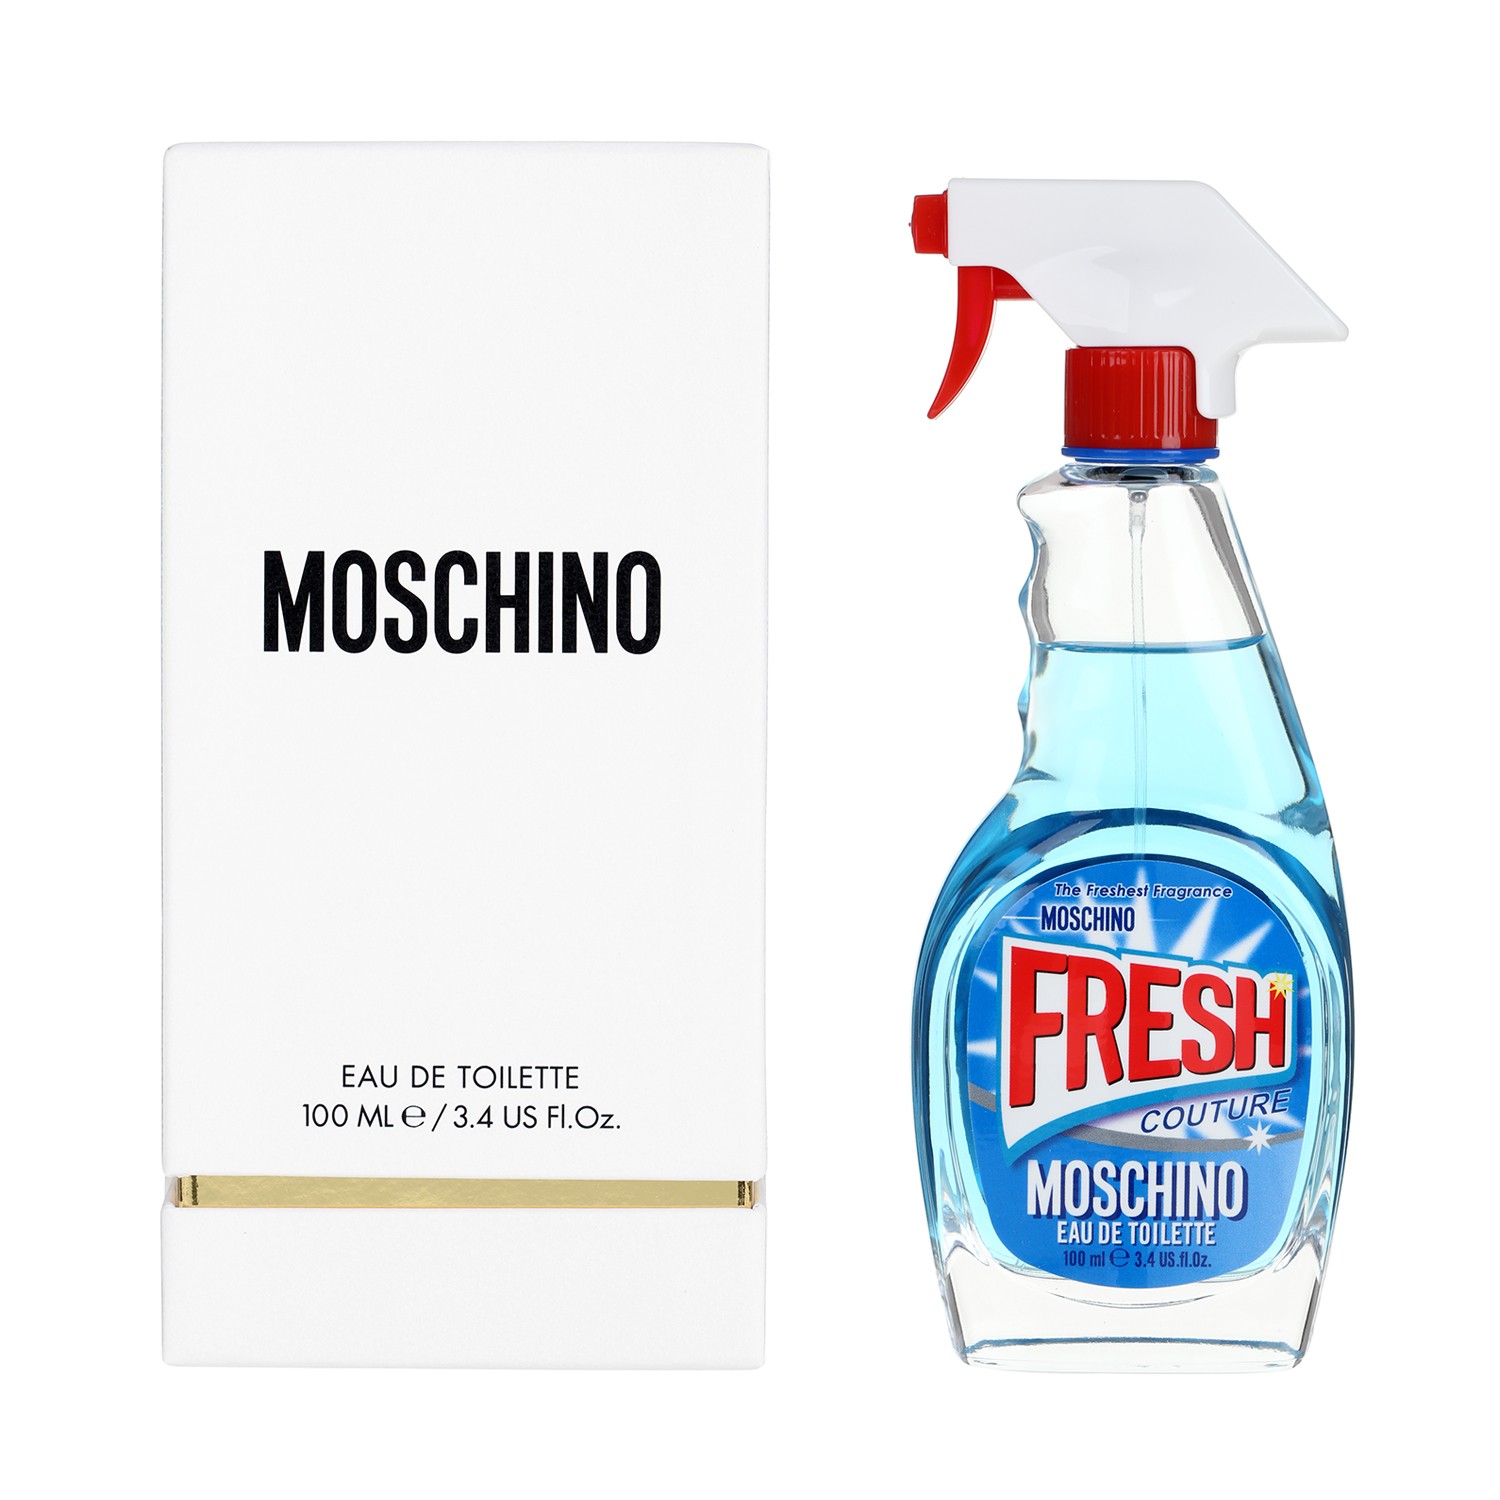 Fresh_Couture_Moschino - ModaNews